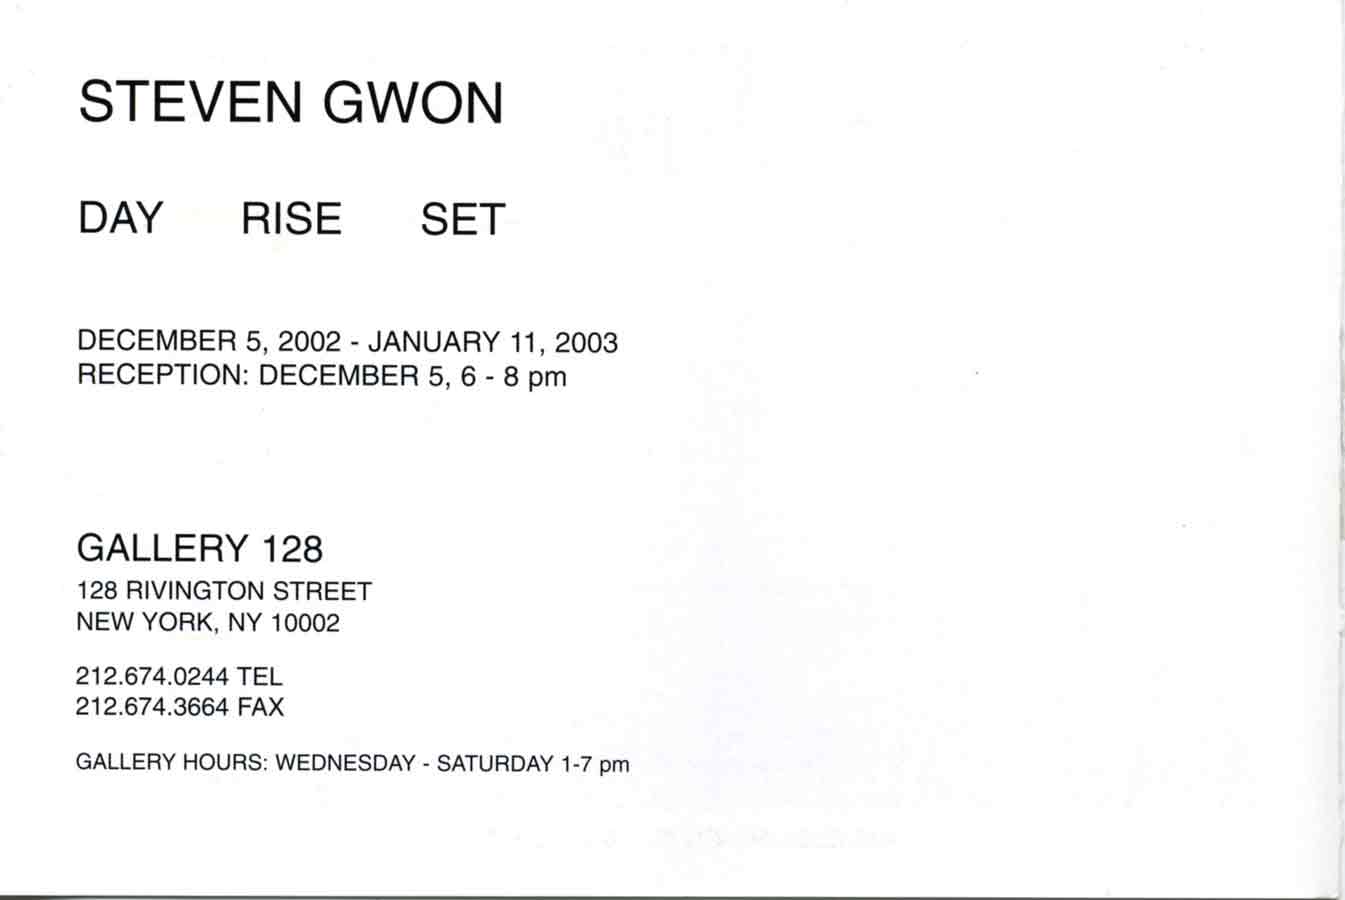 Steven Gwon: Day Rise Set, flyer, pg 1